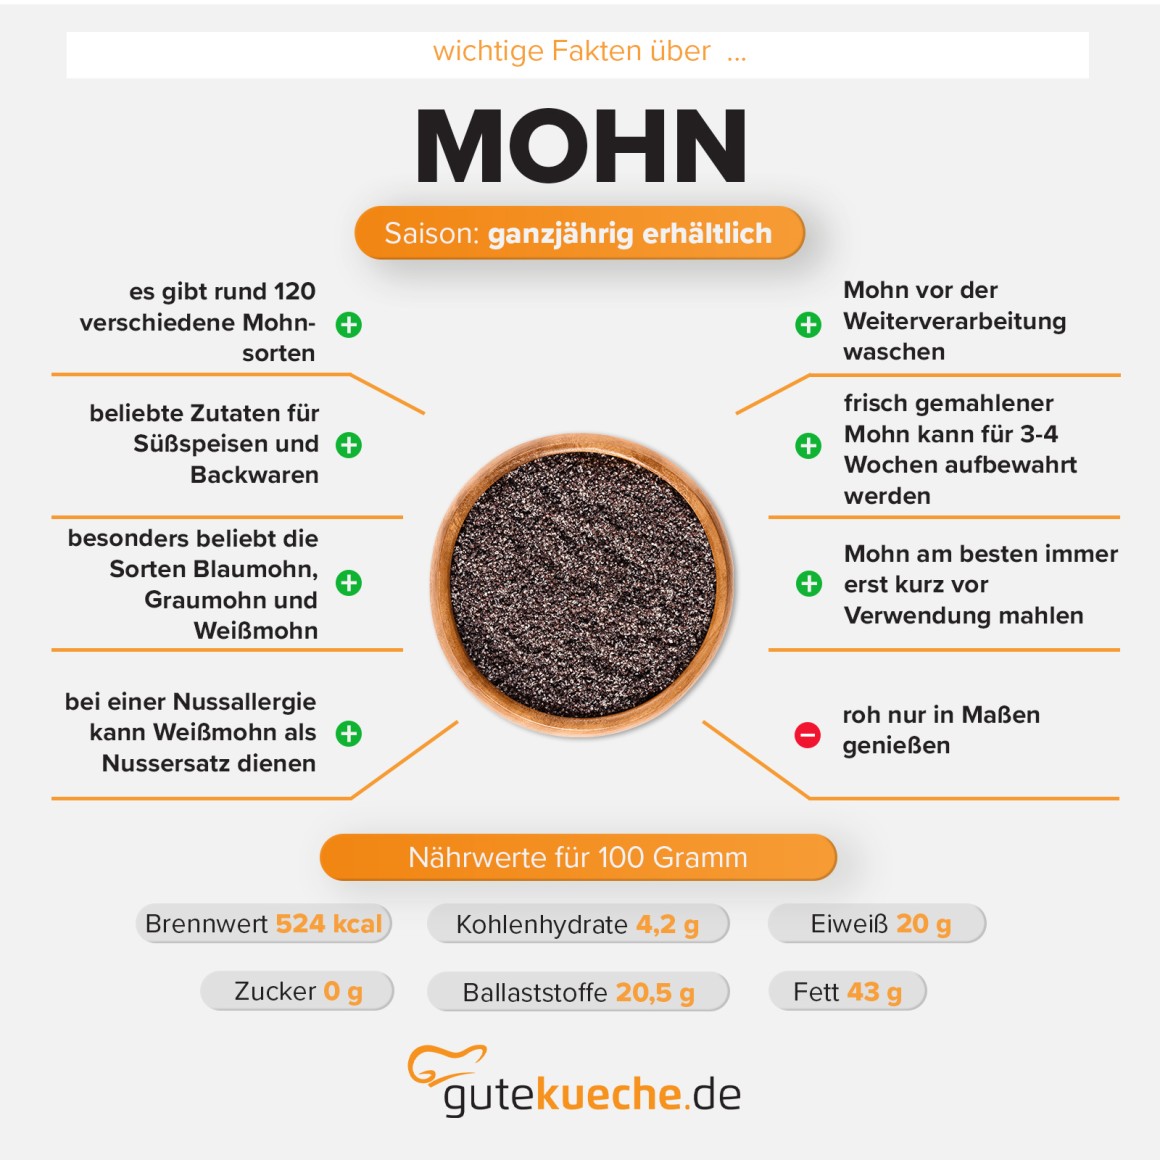 https://cdn.gutekueche.de/media/article/46799/conv/mohn-infografik-default.jpg